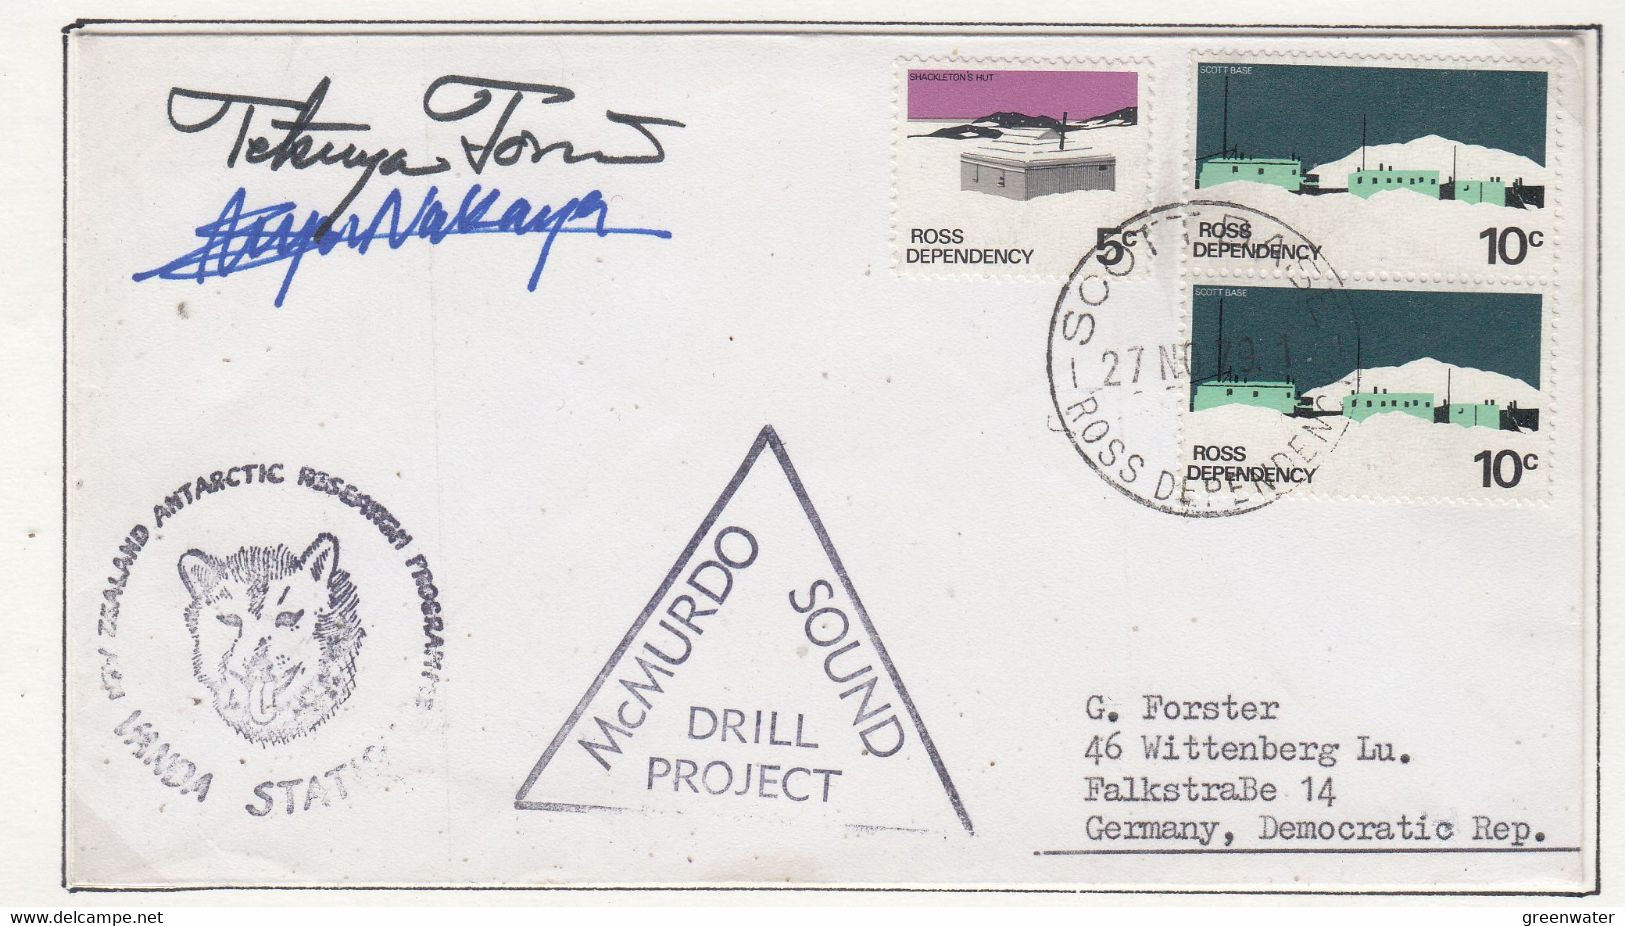 Ross Dependency Vanda Station 1976 Ca McMurdo Signature 2 Japanese Team Members Ca Scott Base 27 NO (76) (CB154A) - Lettres & Documents